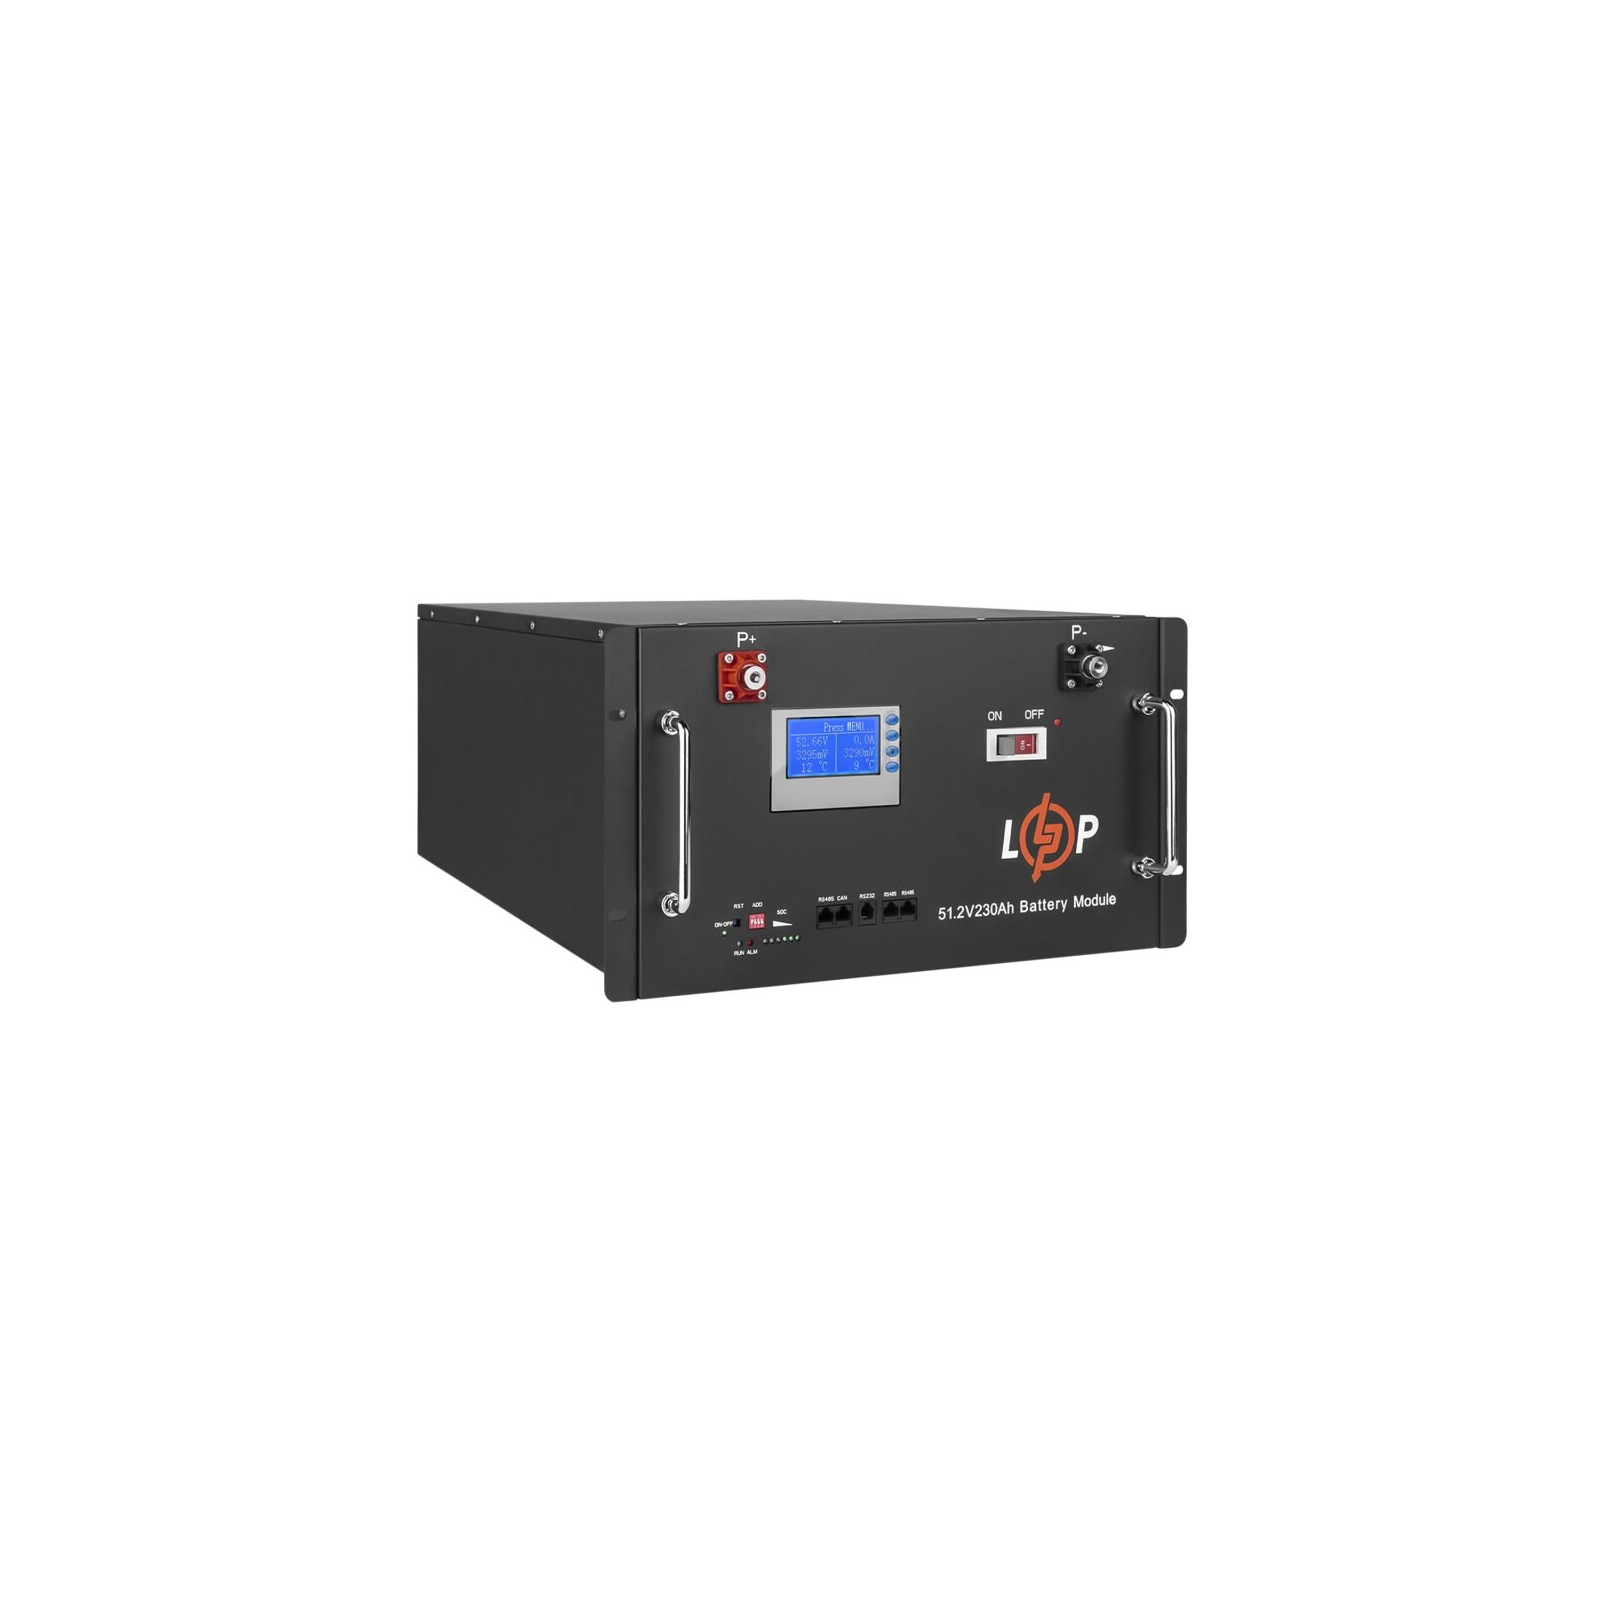 Батарея LiFePo4 LogicPower 48V (51.2V) - 230 Ah (11776Wh) (20331)